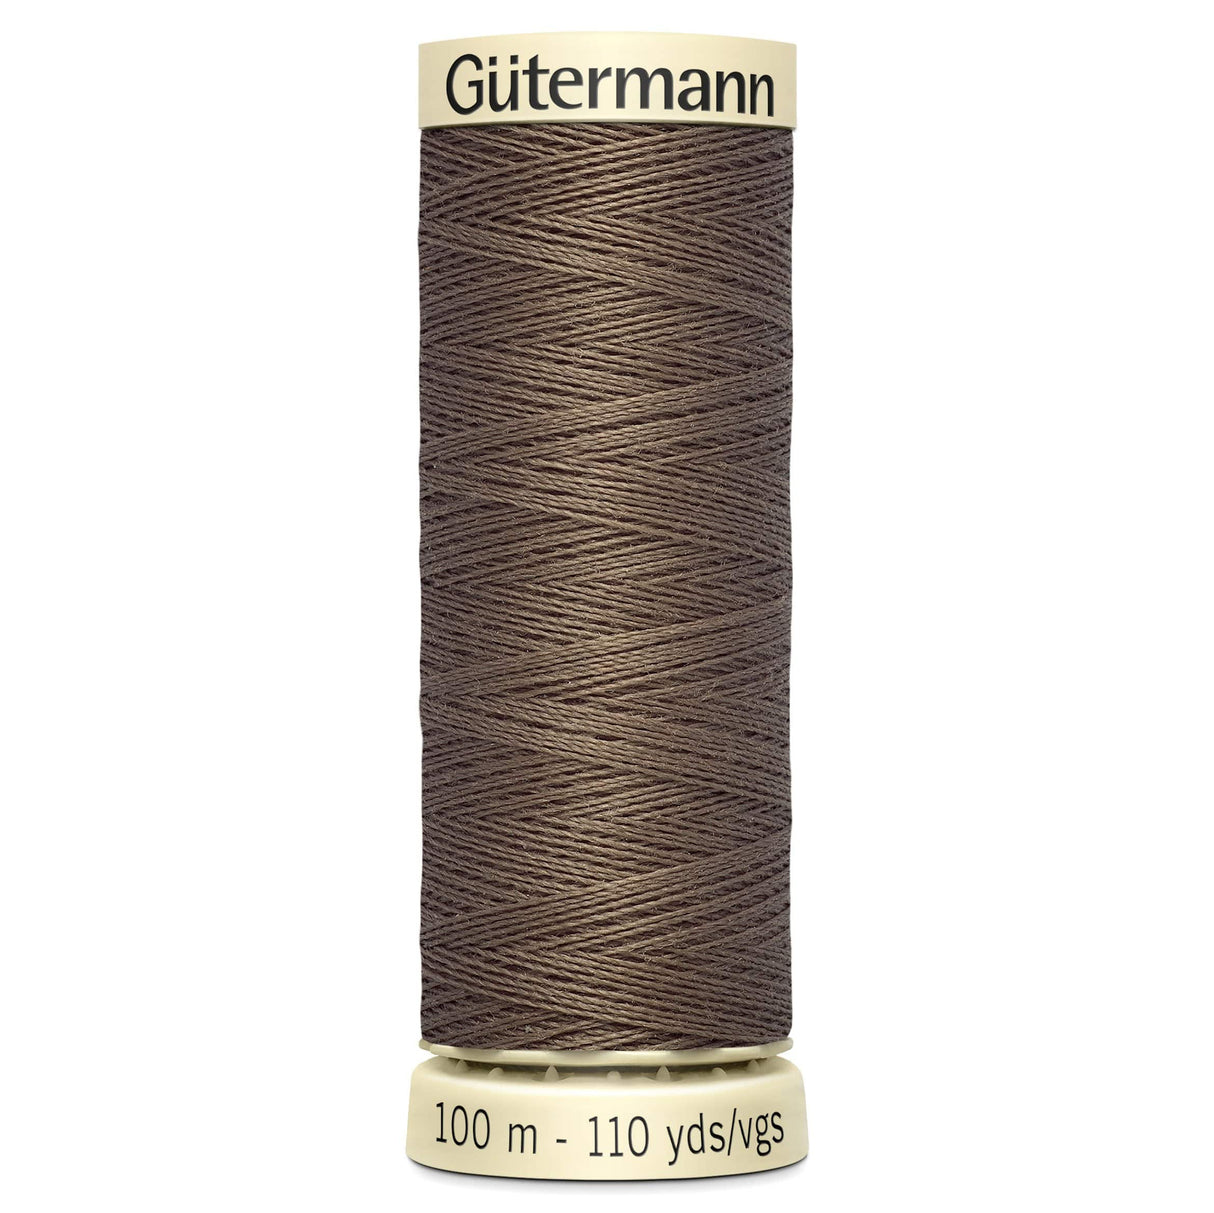 Groves Haberdashery 209 Gutermann Thread Sewing Cotton 100 m Black to Pink